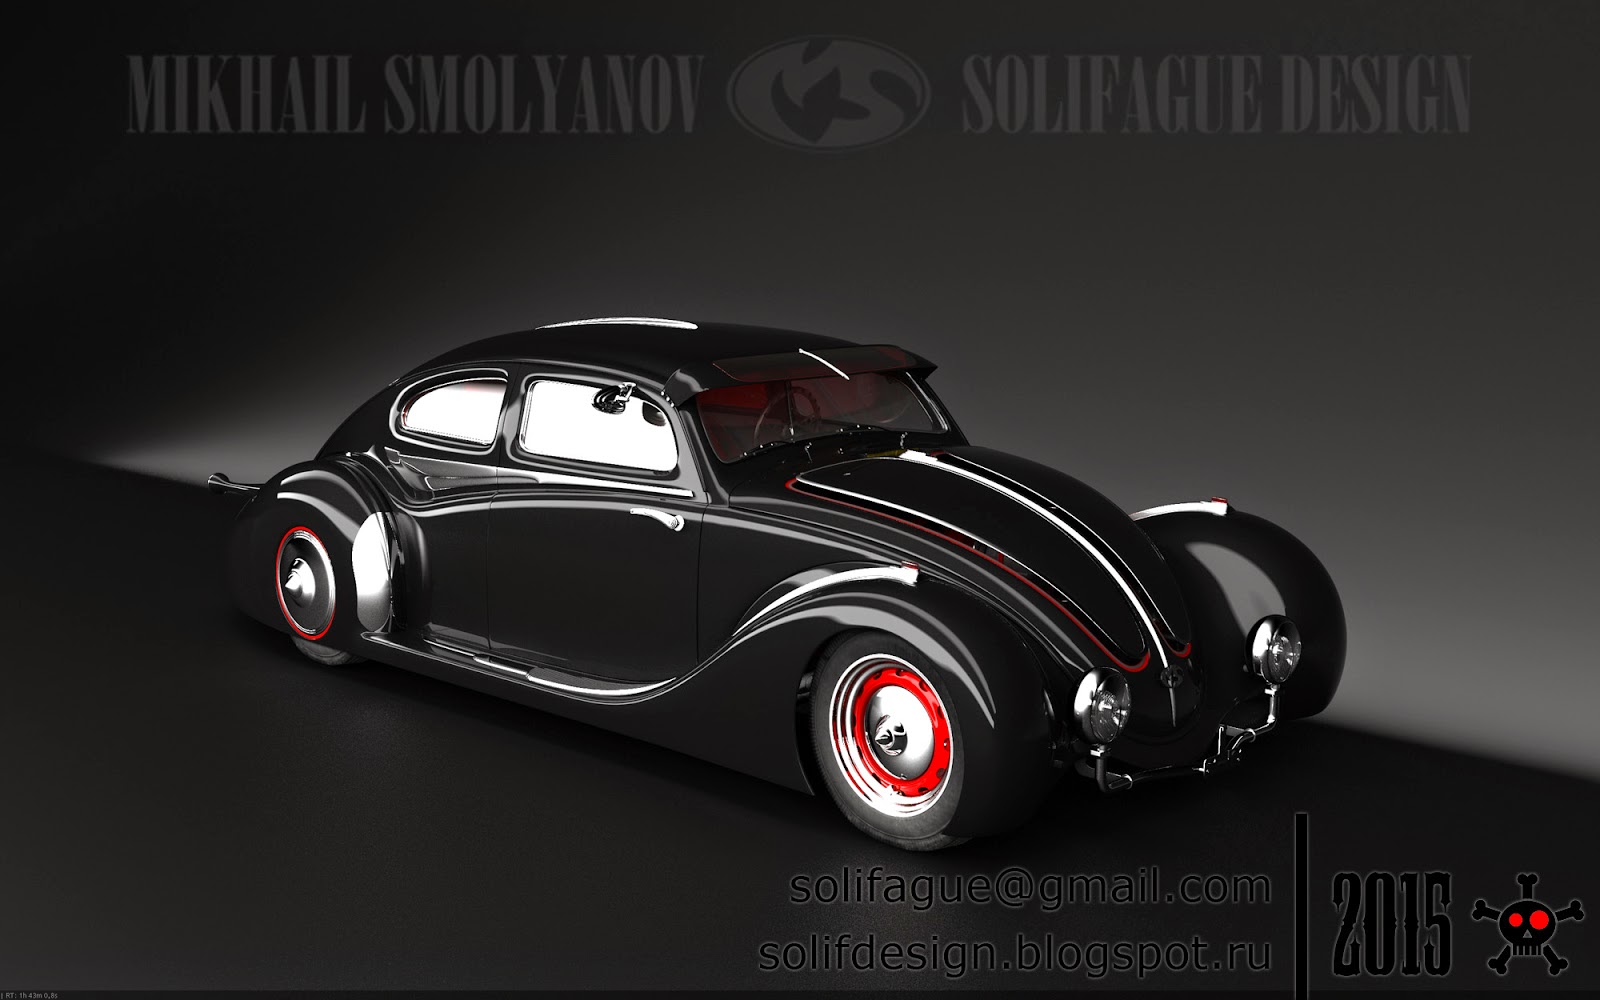 Solifague Design: VW Beetle Custom Black Edition